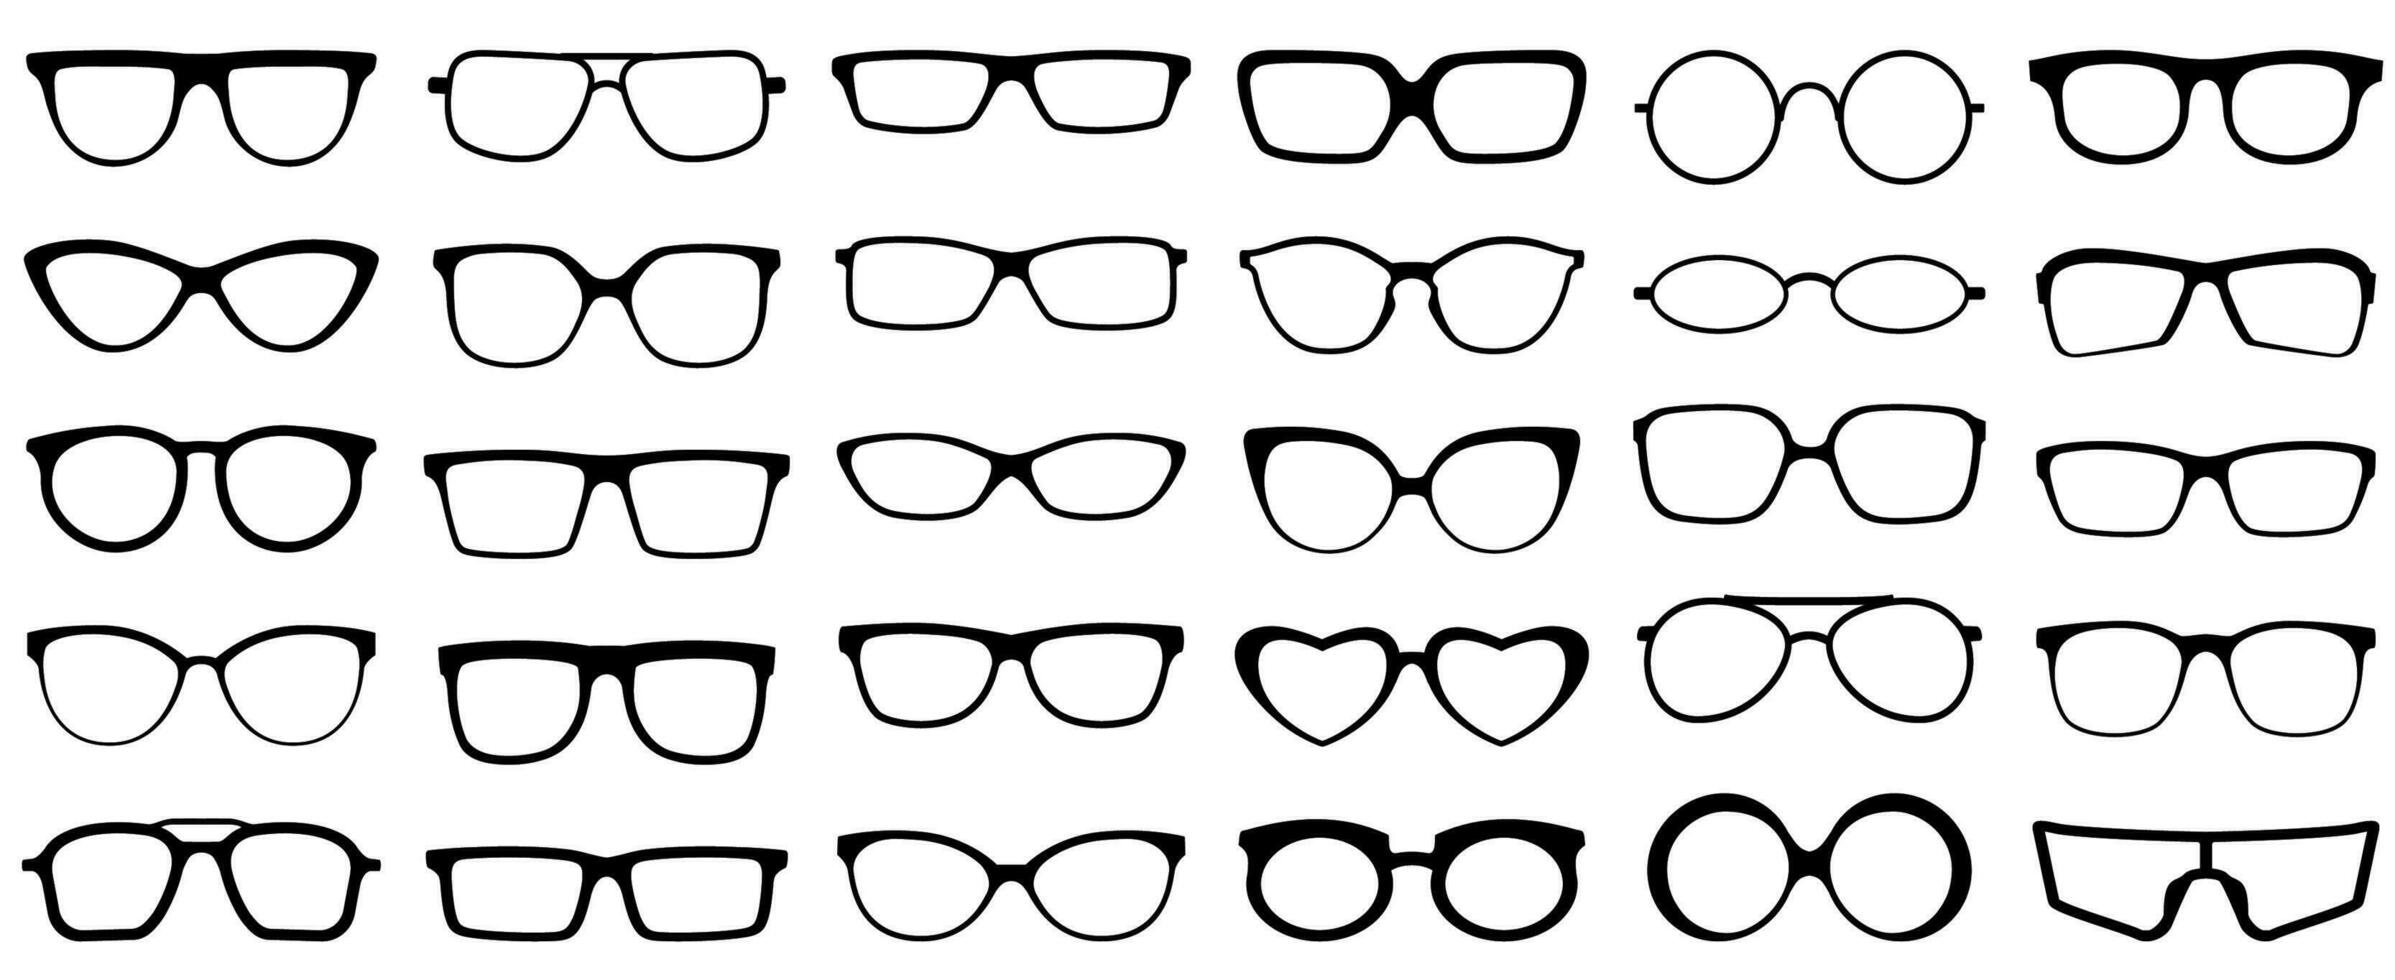 Glasses silhouette. Retro glasses, eye health eyewear and rim sunglasses silhouettes vector set